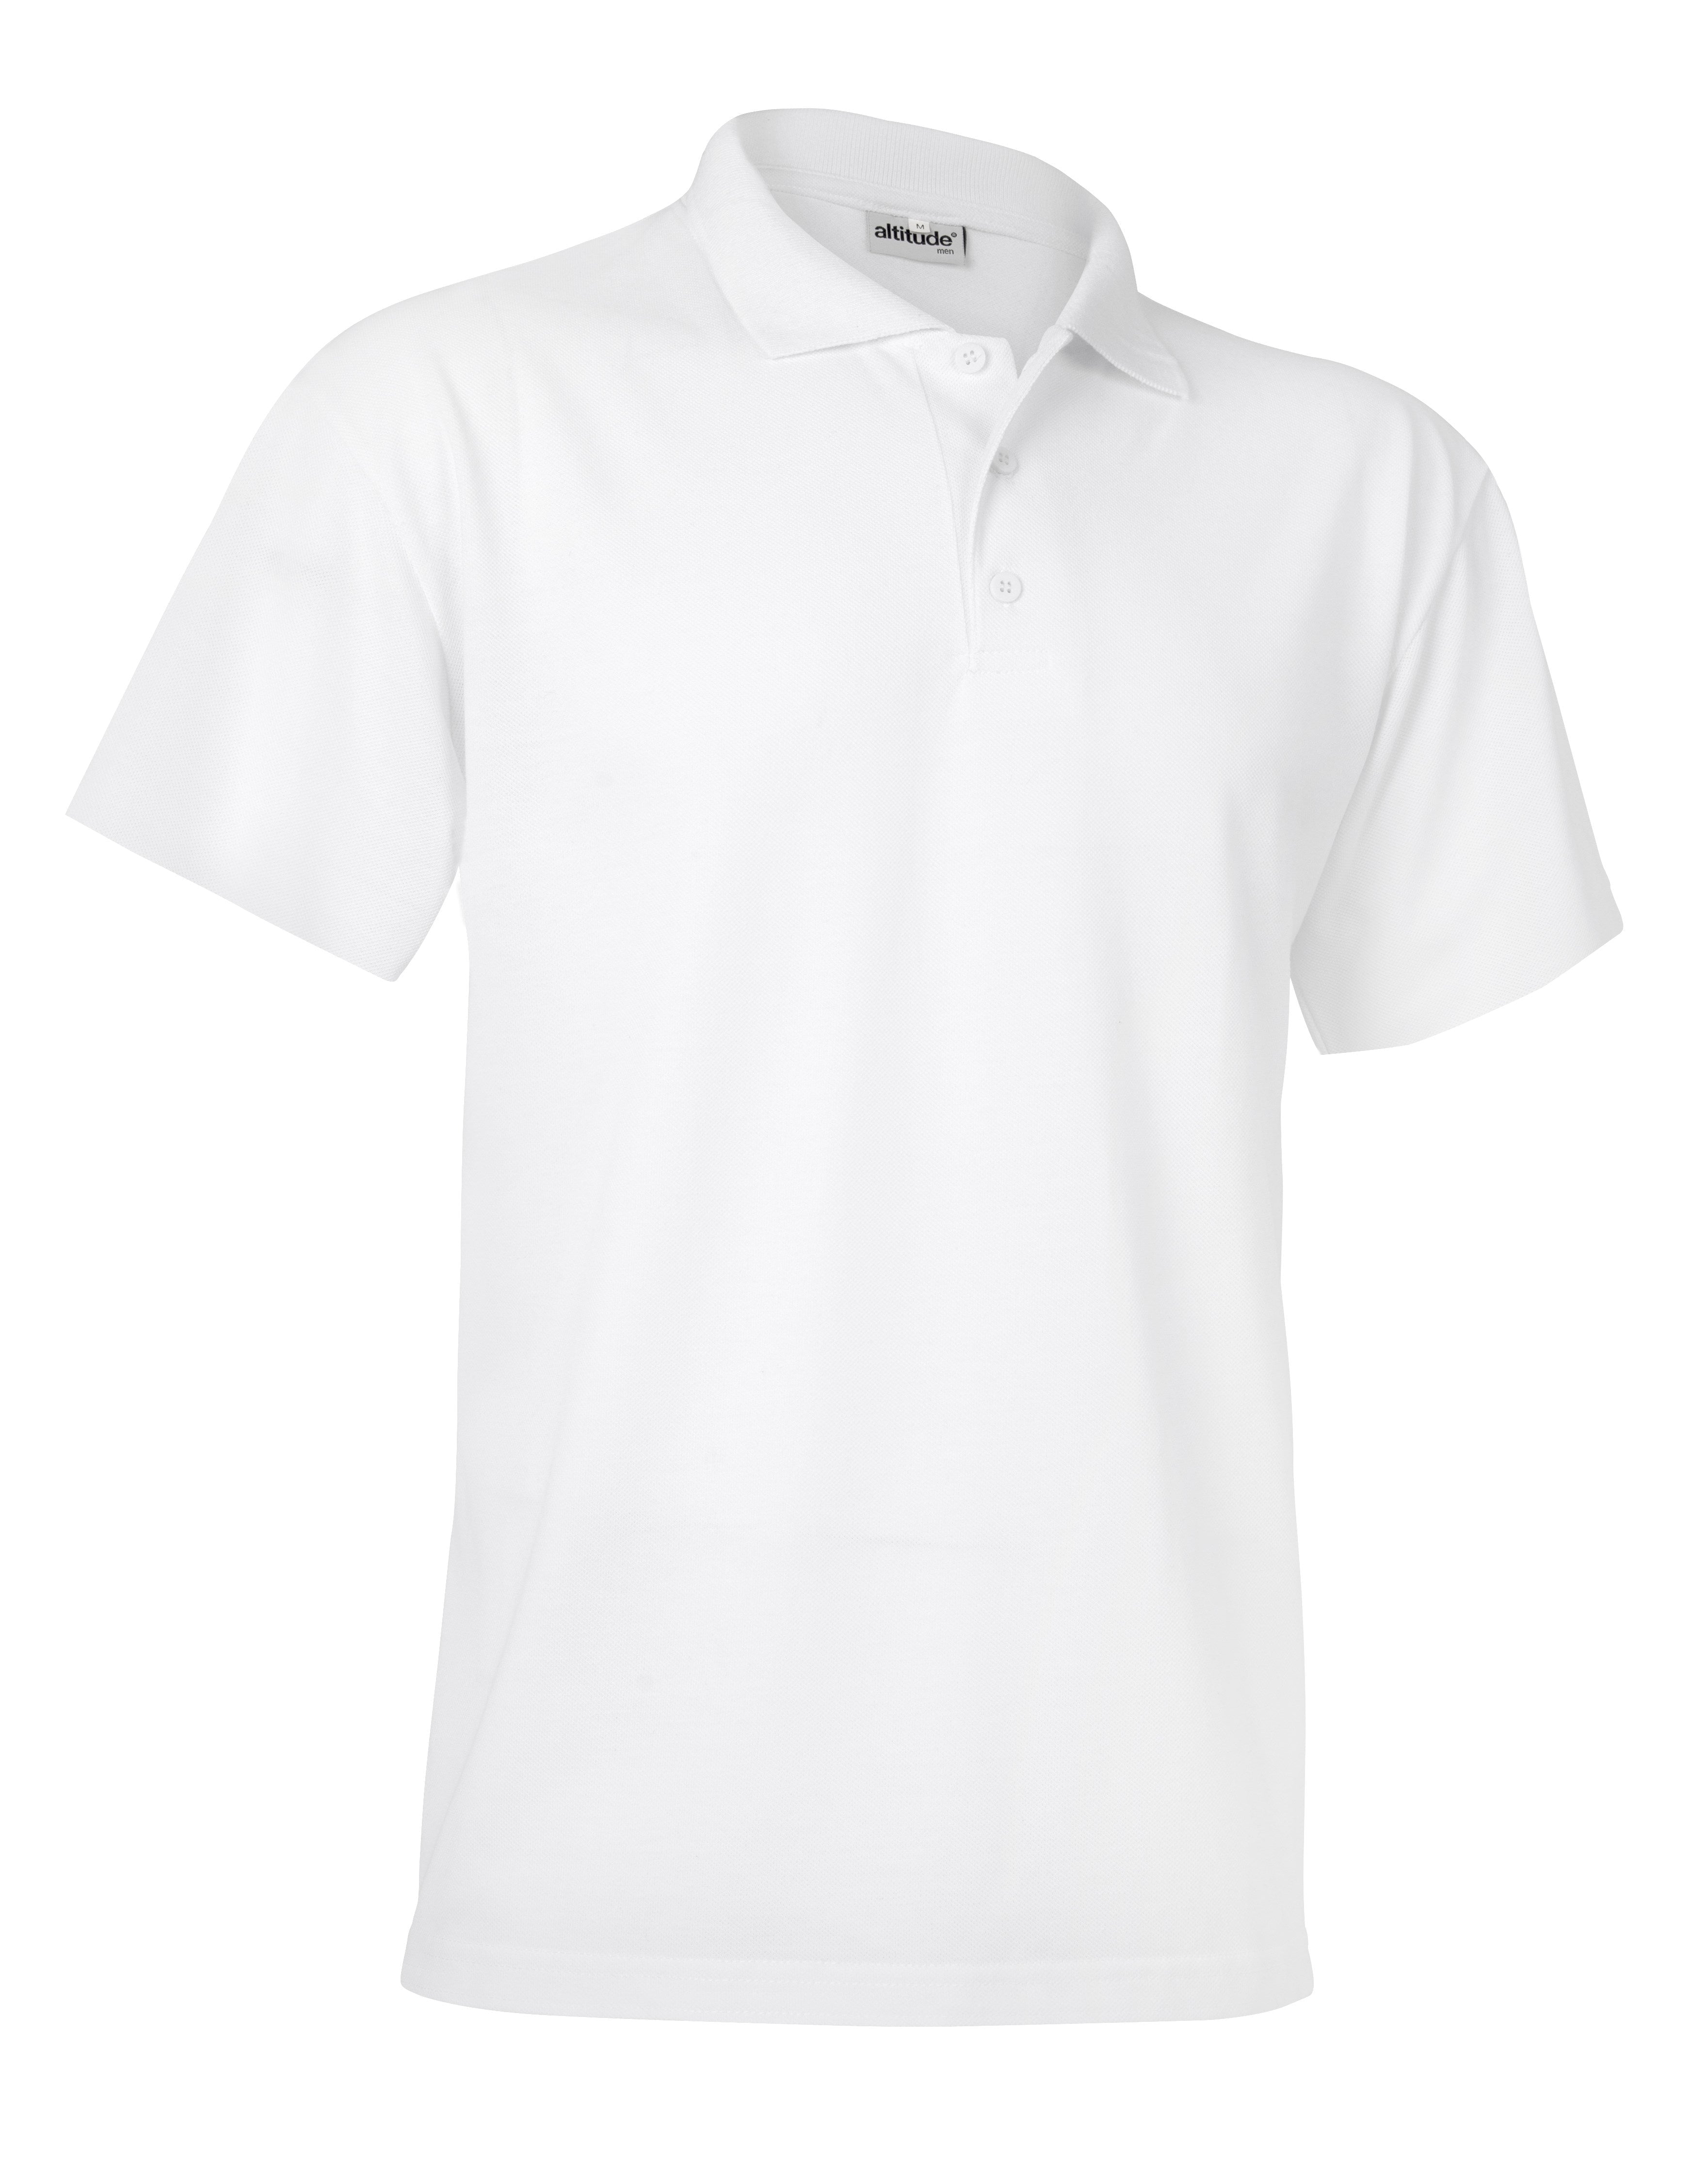 Mens Melrose Heavyweight Golf Shirt - White Only-